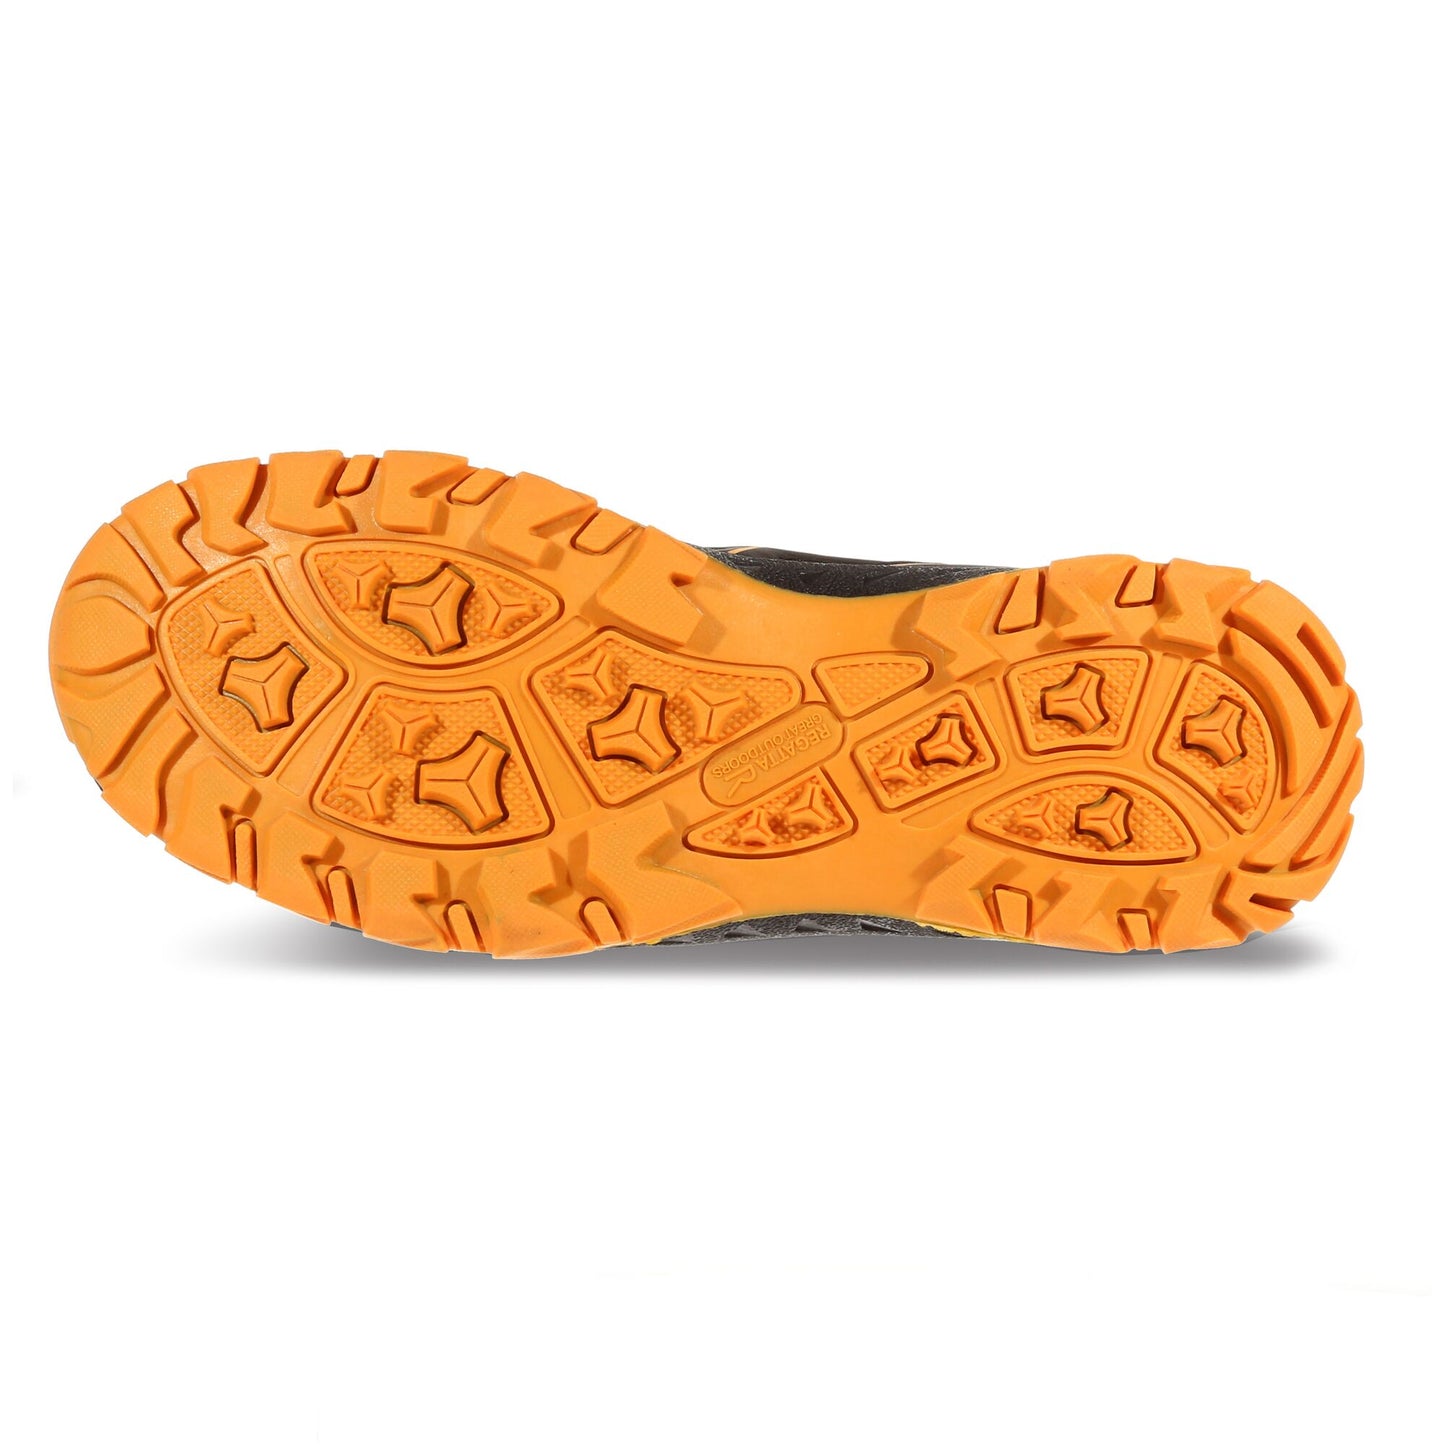 Men's Vendeavour Waterproof Walking Shoes - Black/Regatta Orange